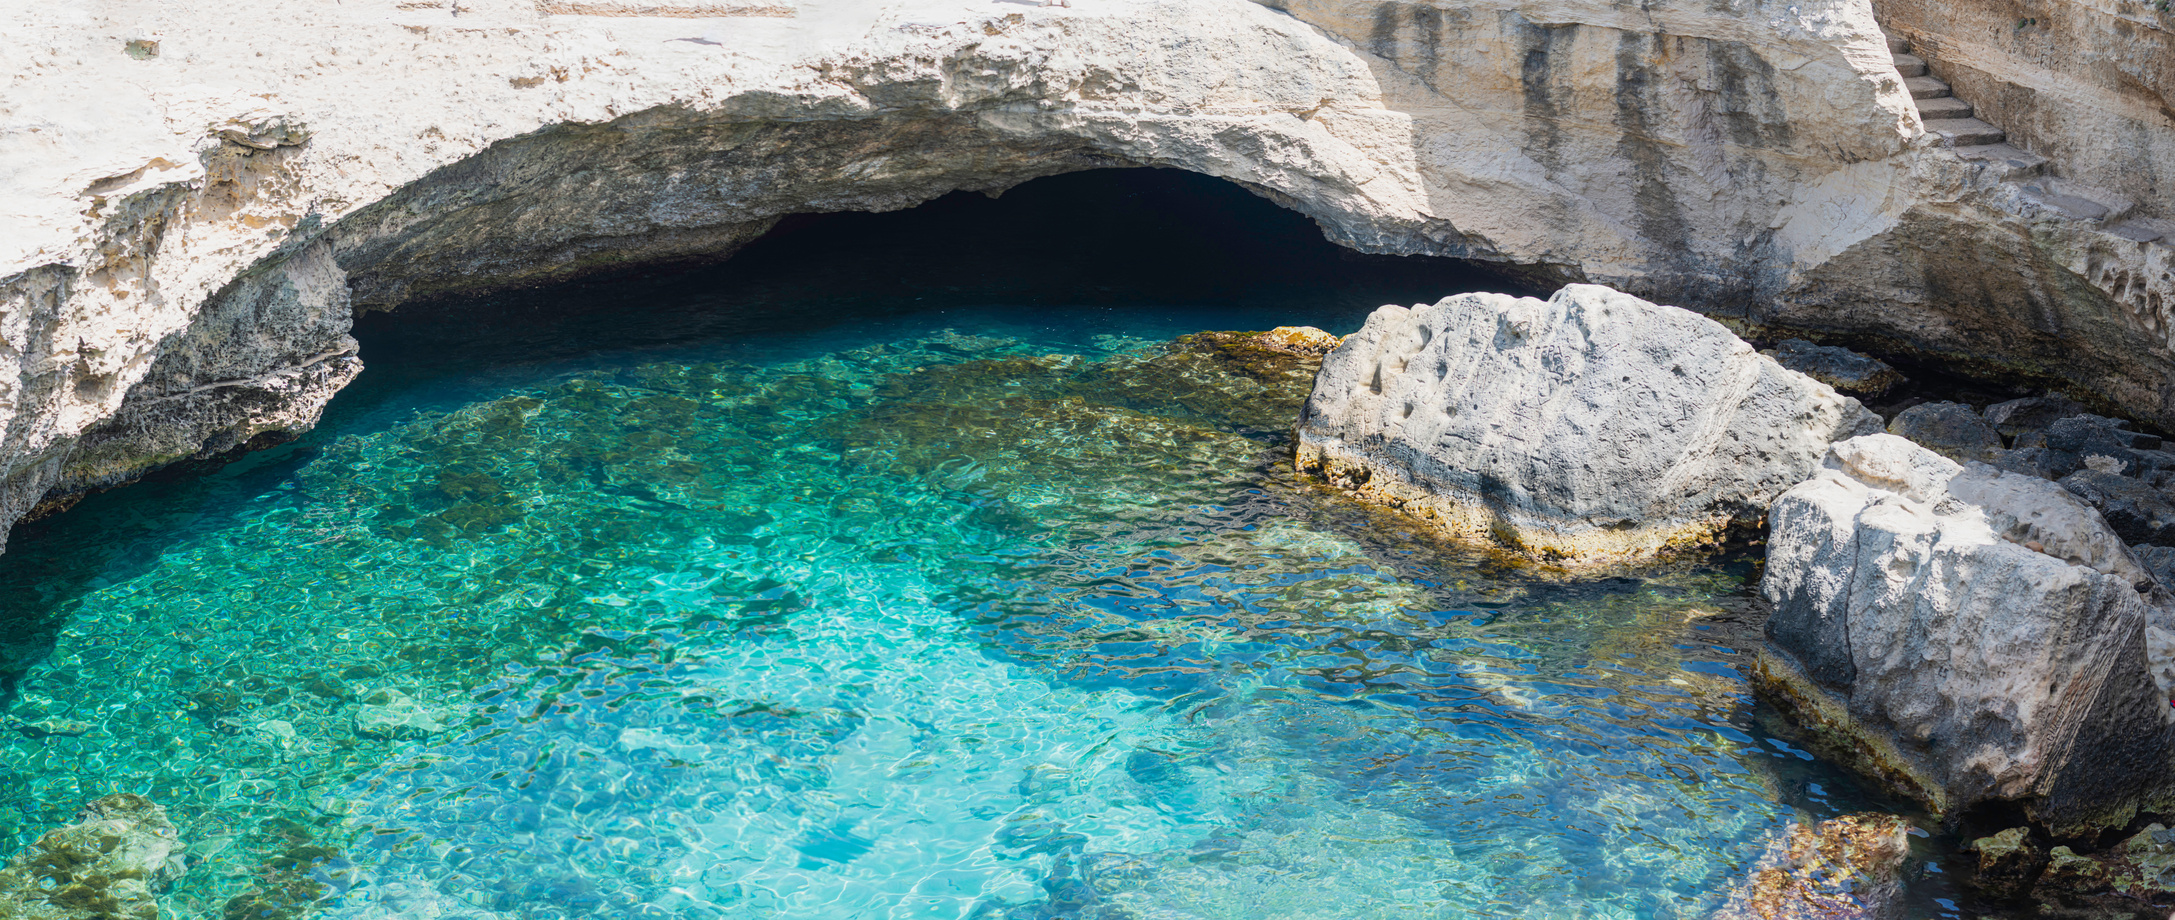 Holiday in Apulia. Cave of Poetry (Grotta della Poesia). Roca vecchia - Apulia. Italy